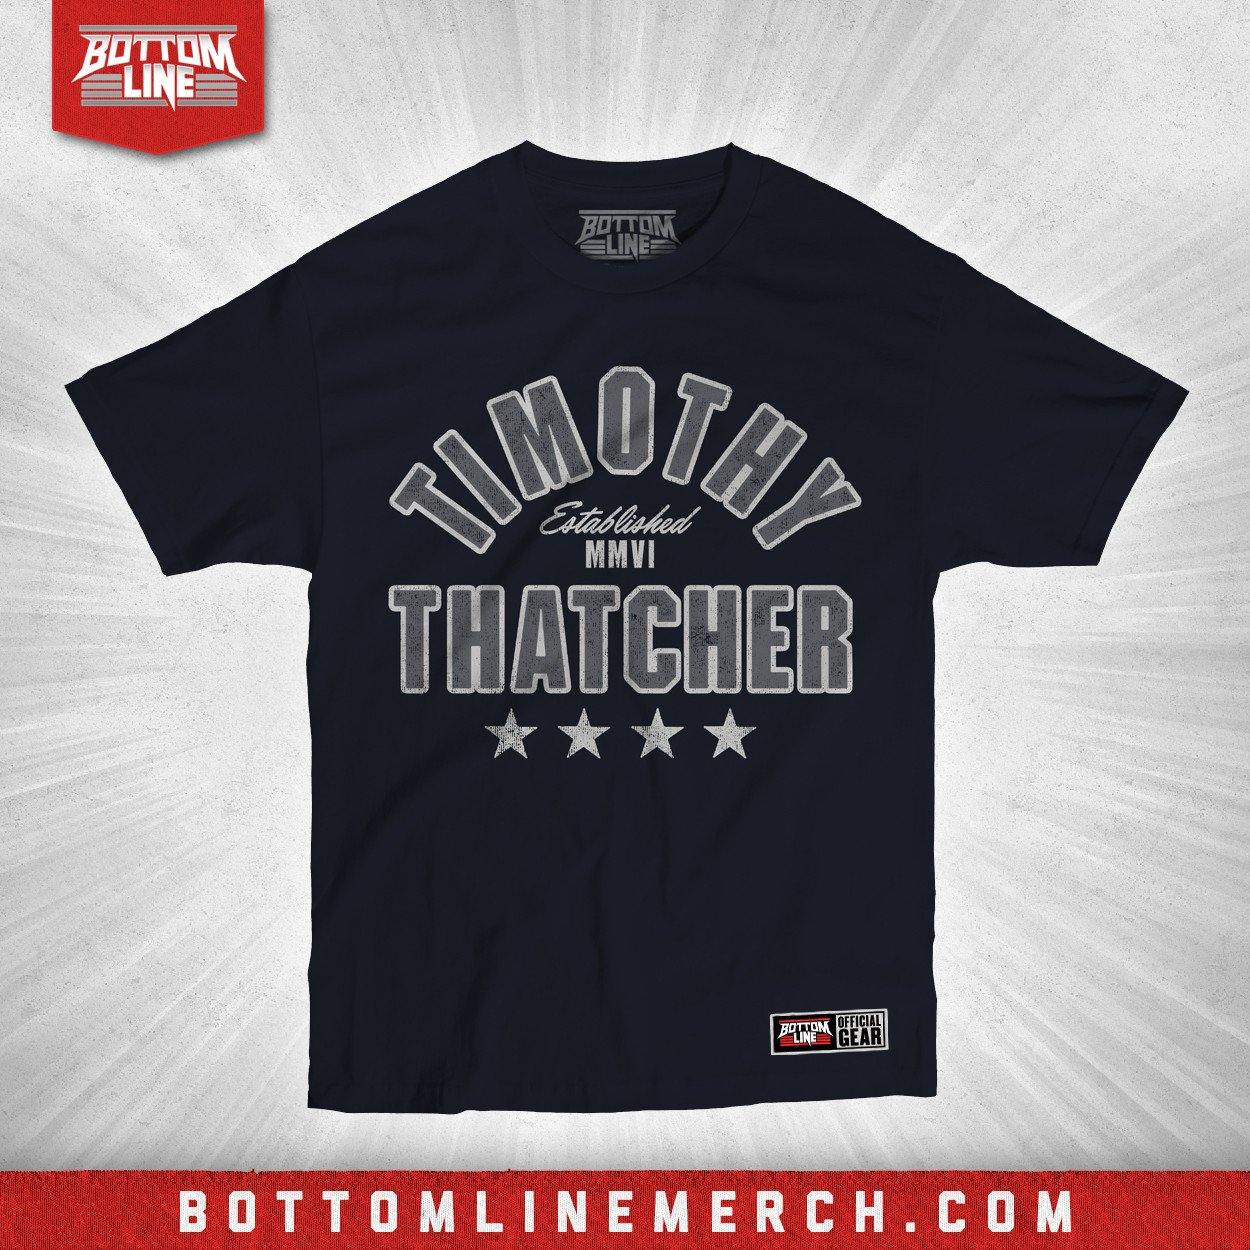 Buy Now – Timothy Thatcher "Heavyweight" Shirt – Wrestler & Wrestling Merch – Bottom Line